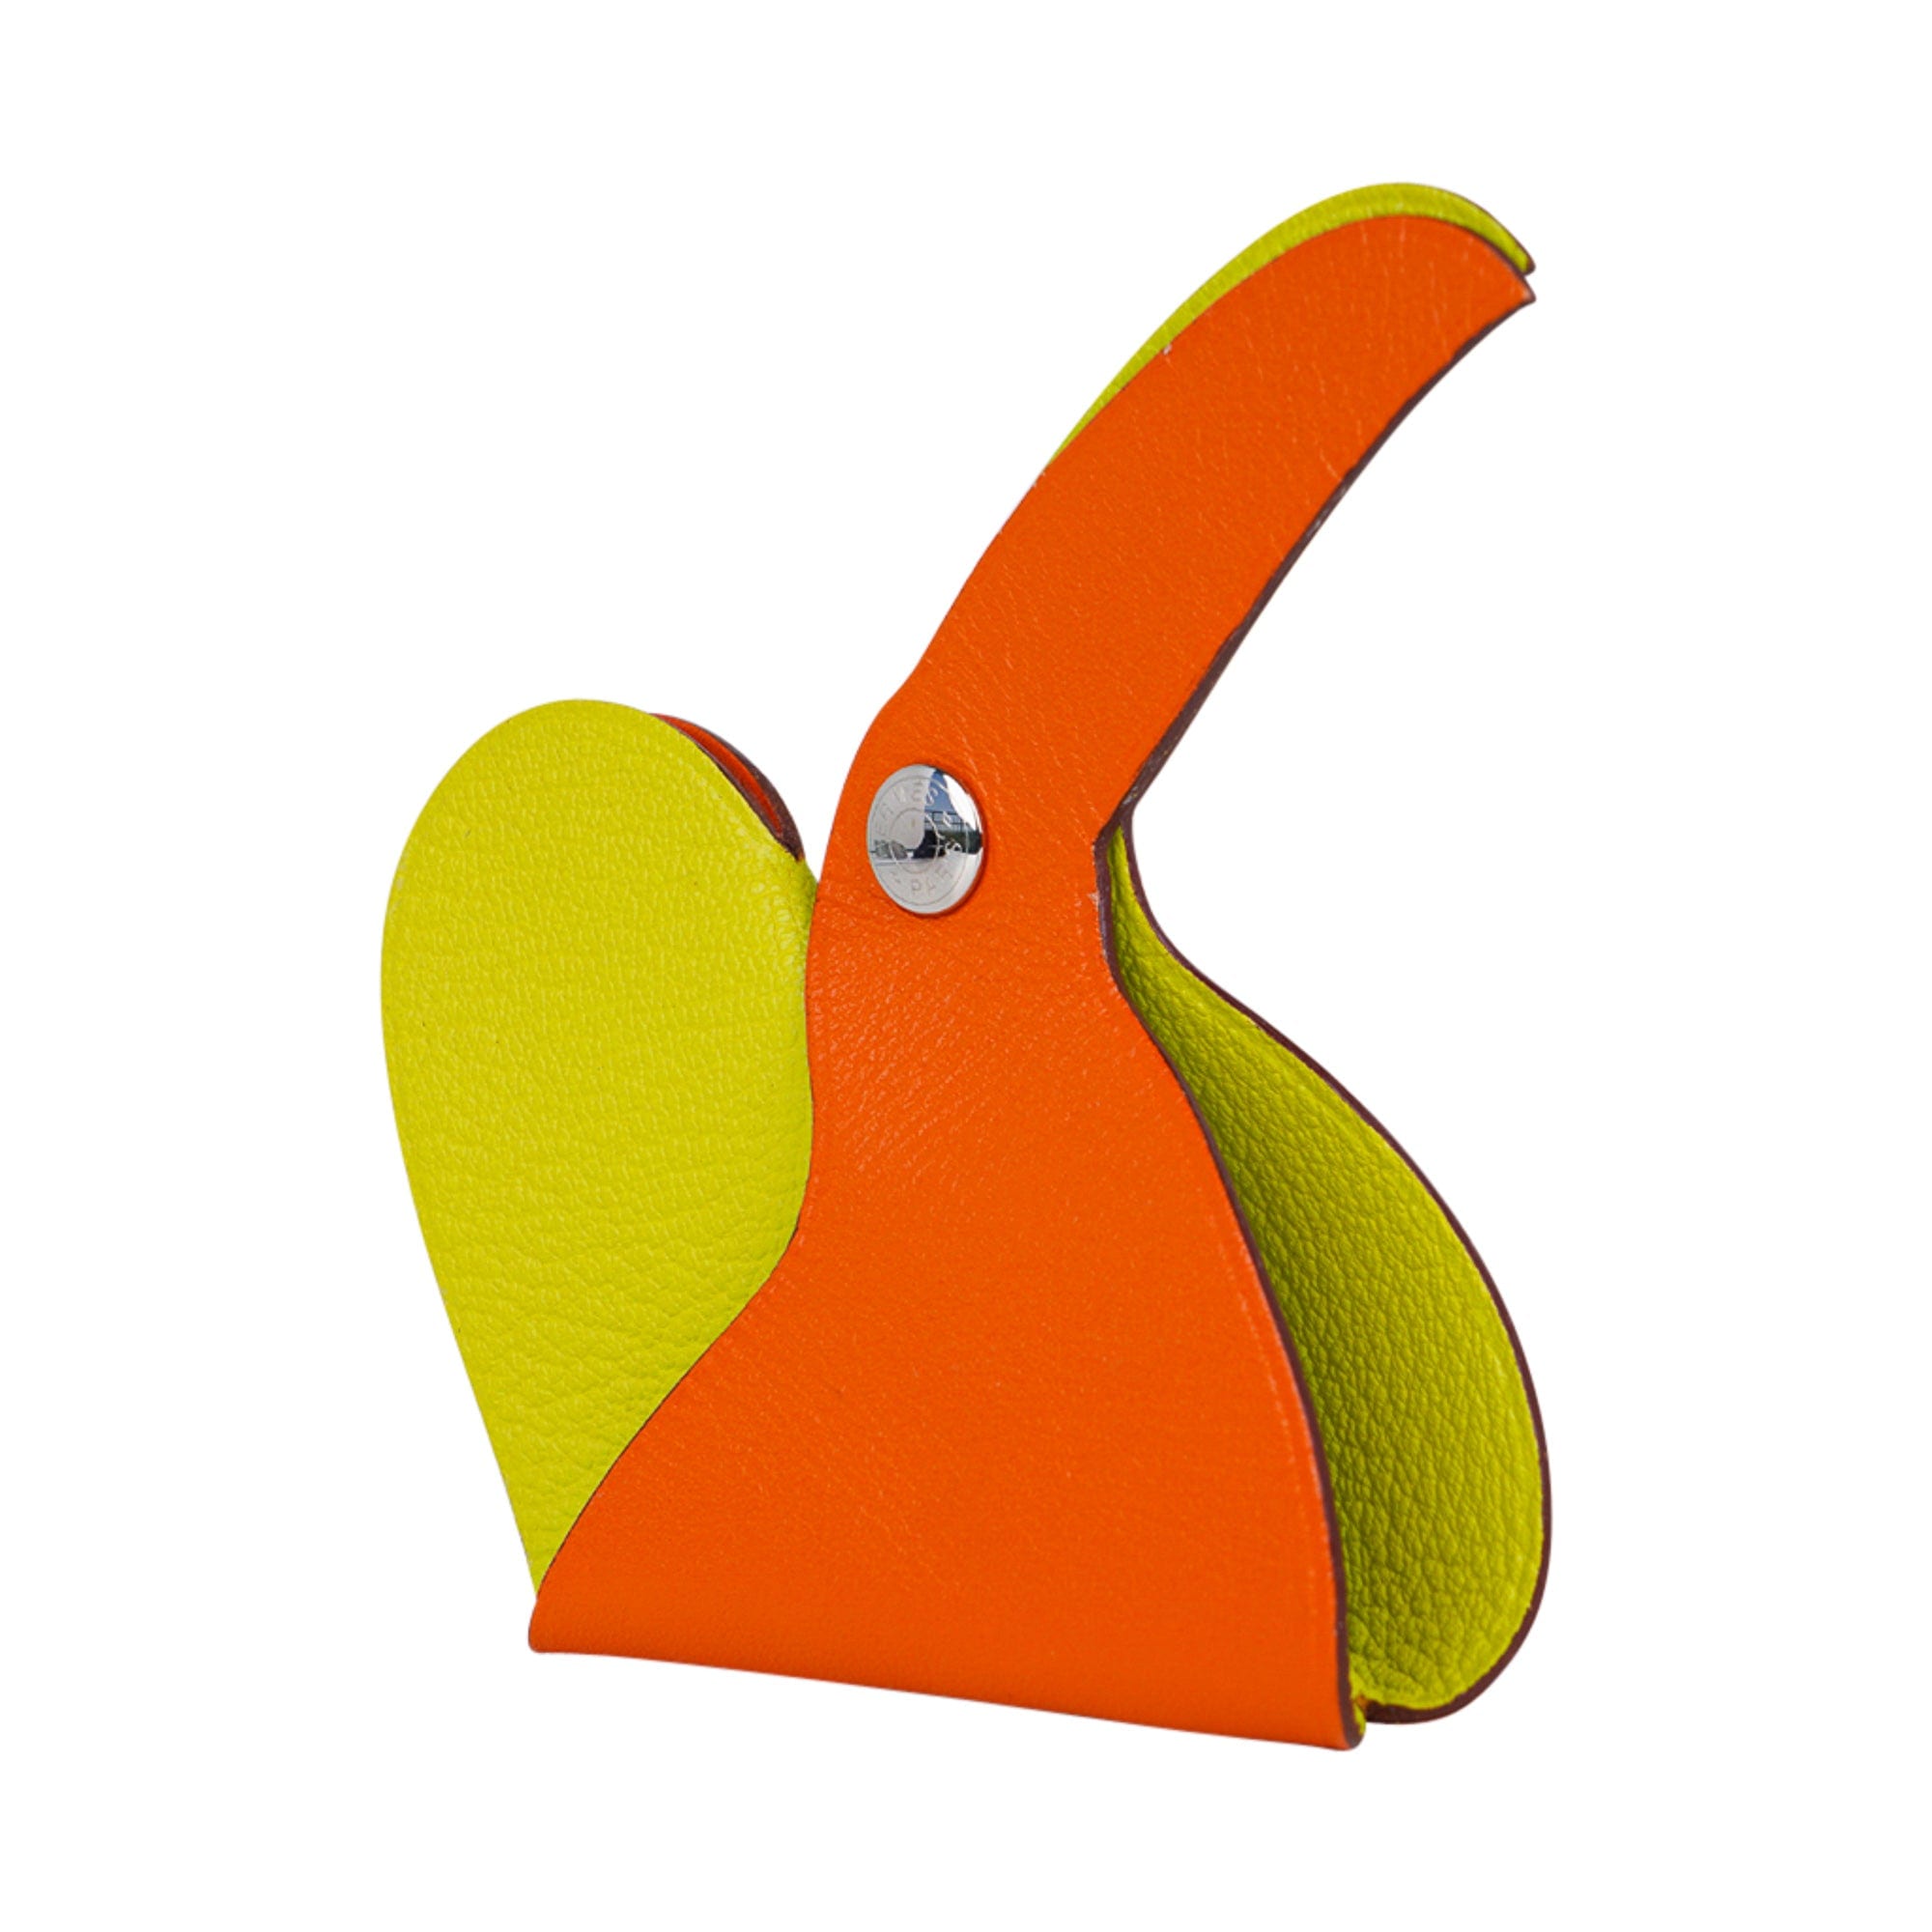 Hermes Clickazoo Toucan Orange / Lime Whimsical Art Piece New w/Box